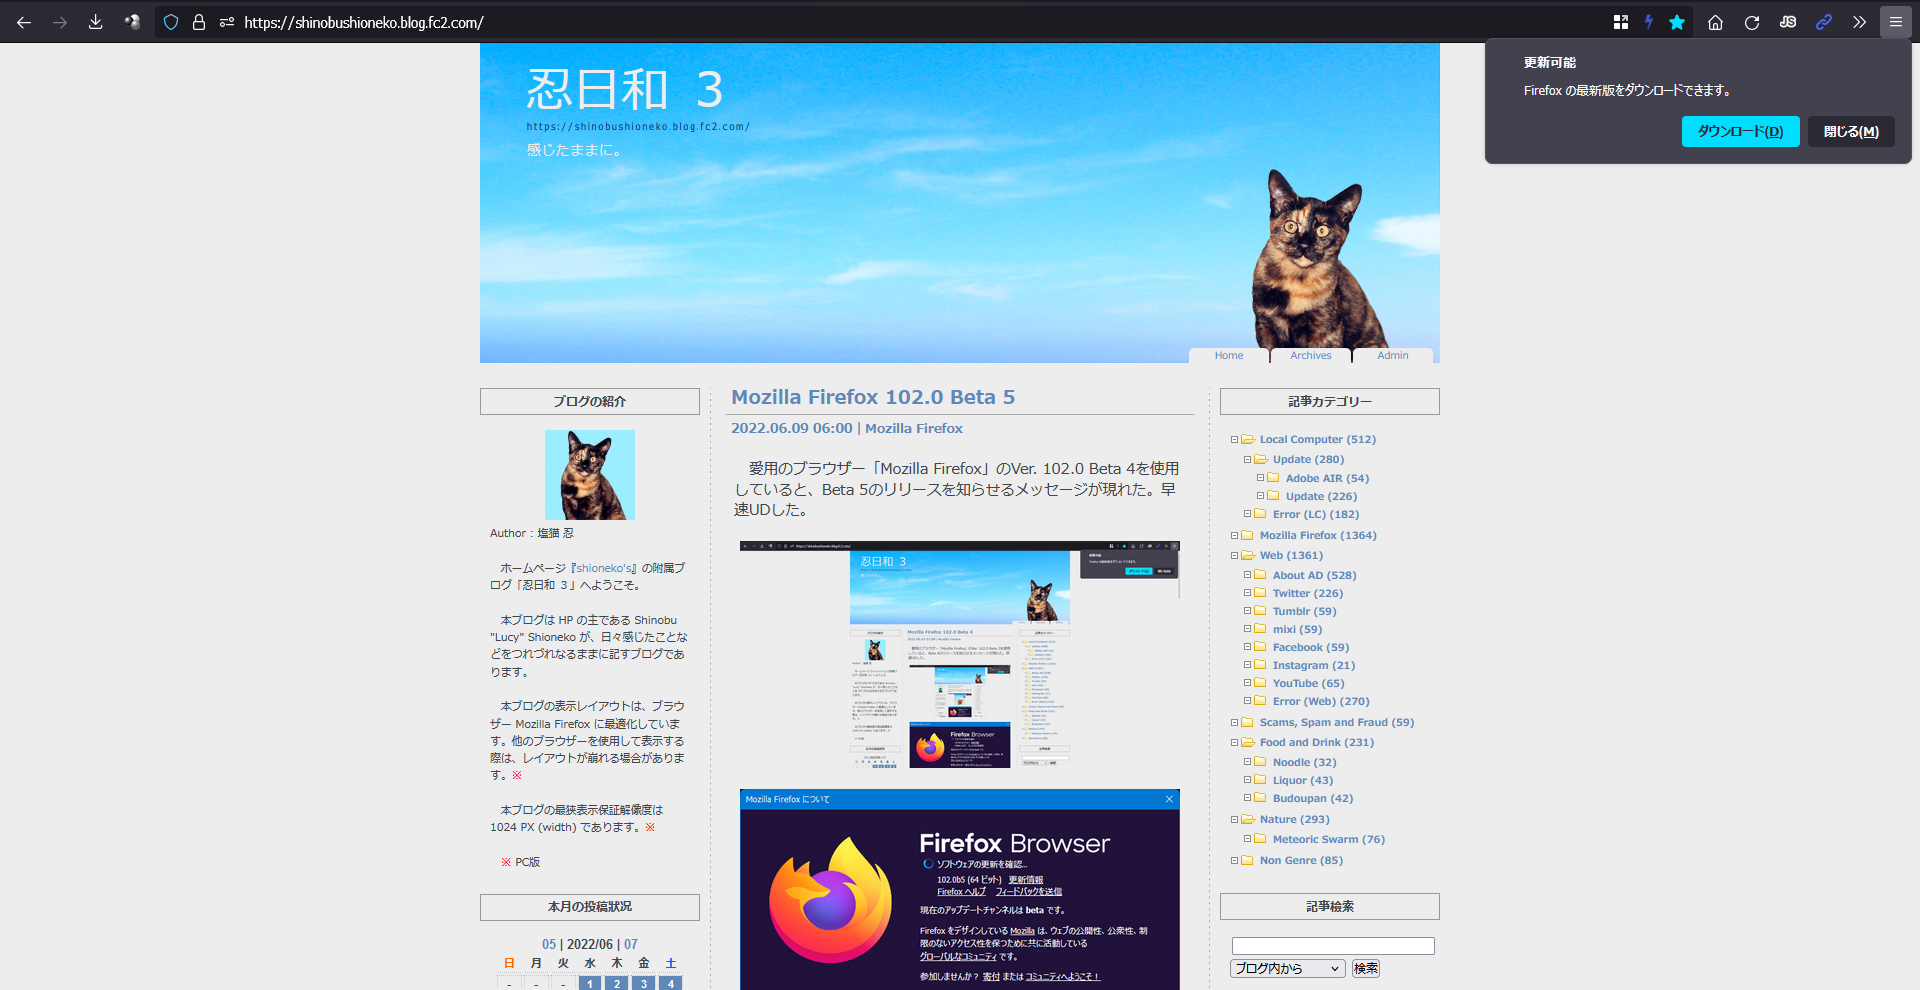 Mozilla Firefox 102.0 Beta 6